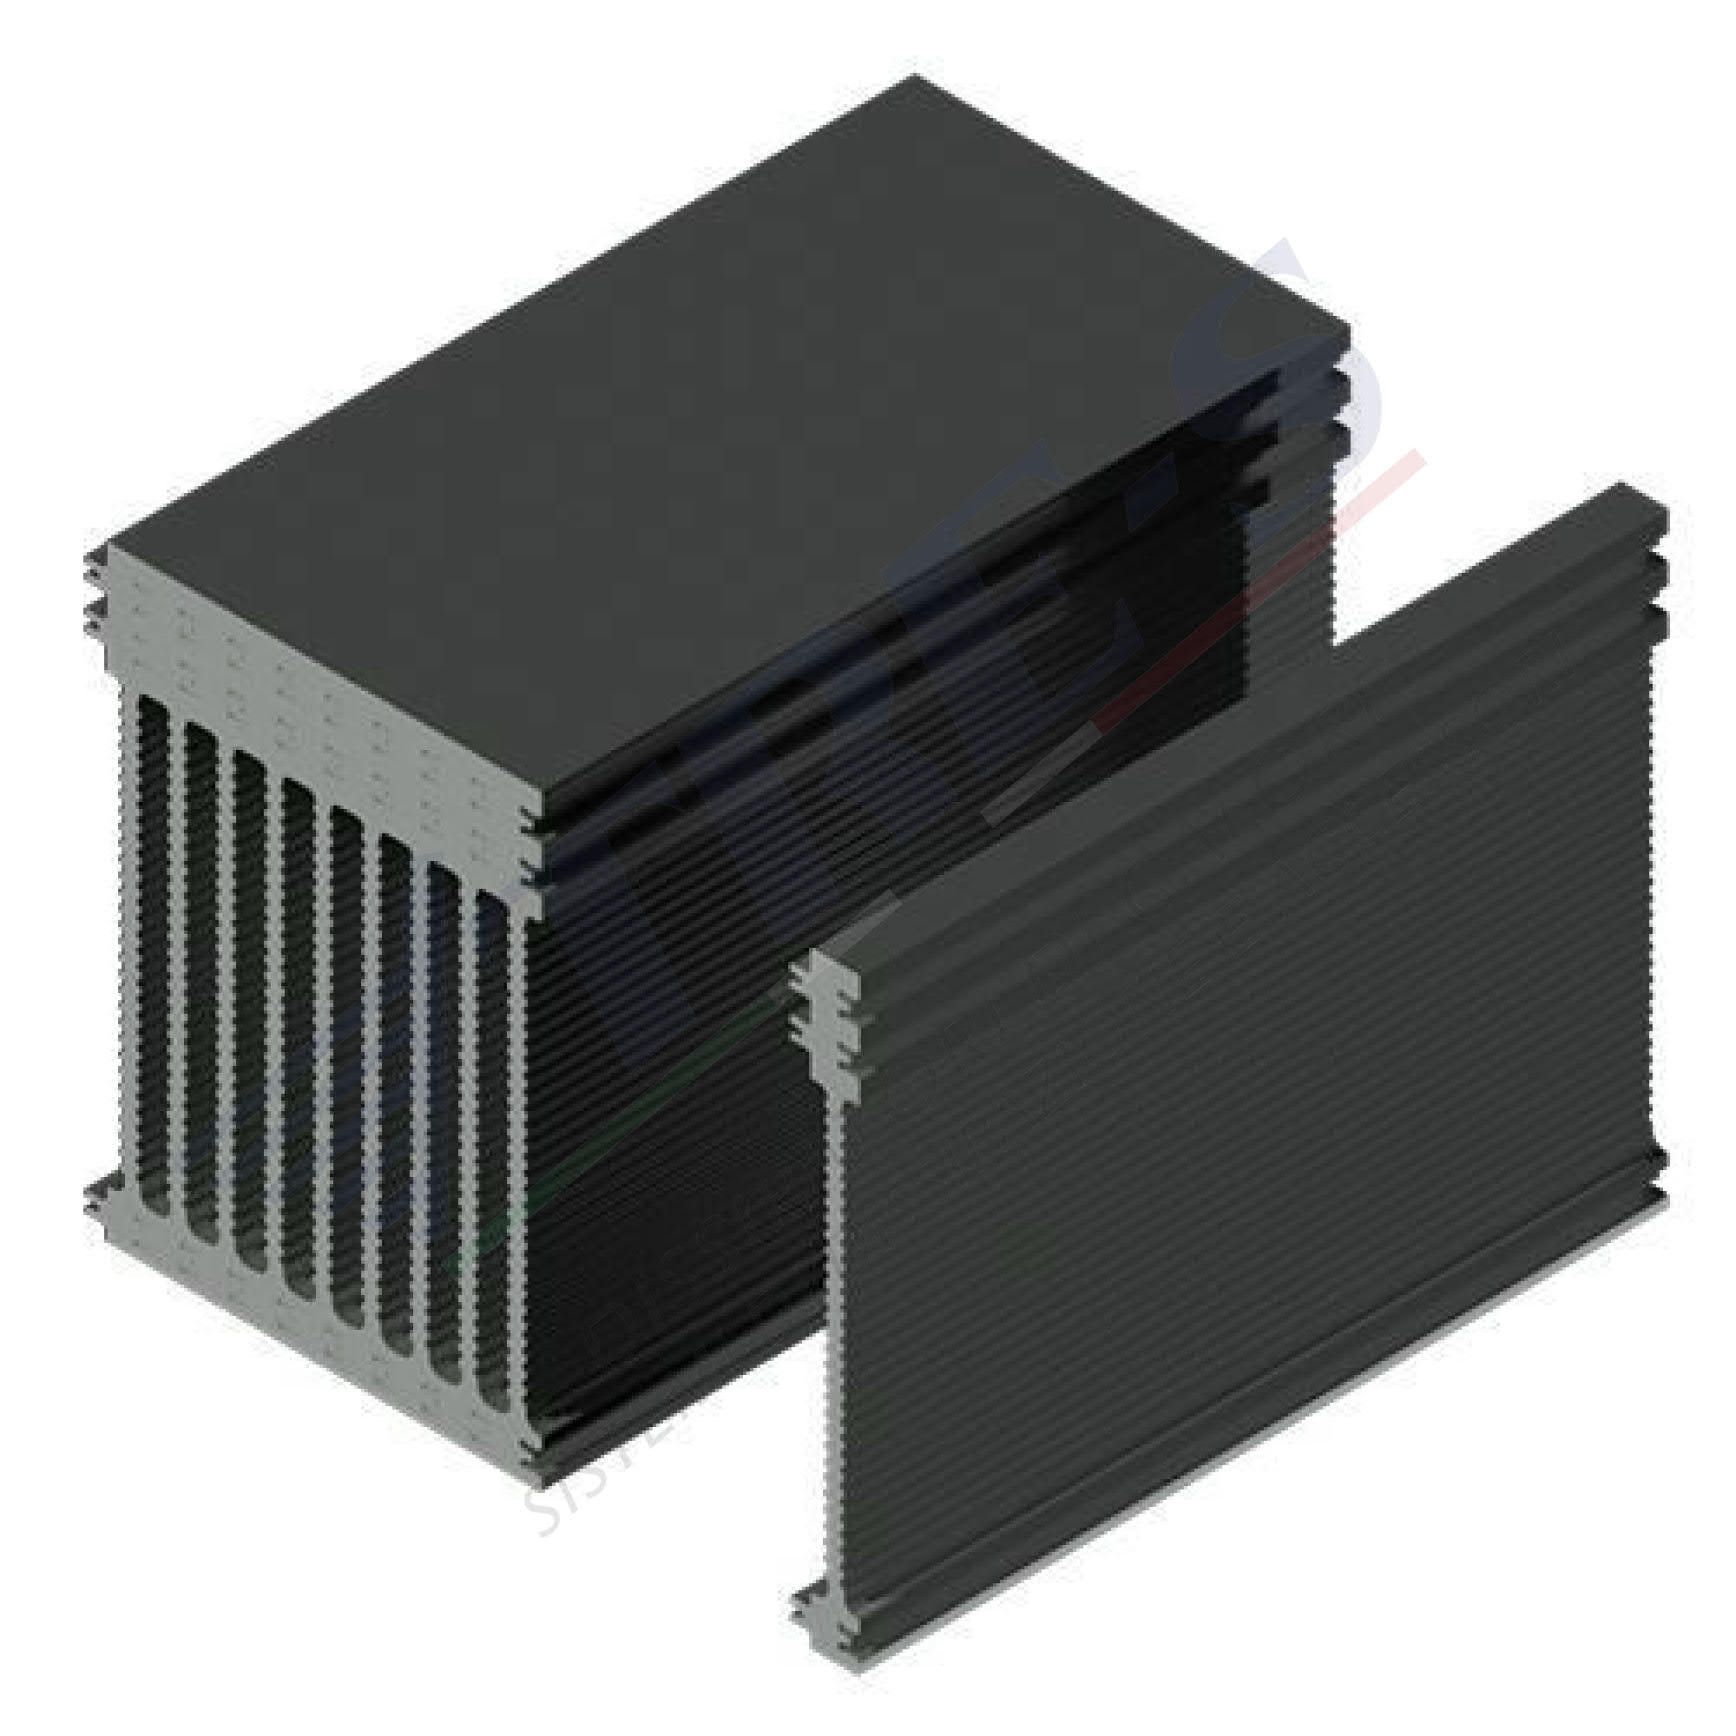 PRI1016 - Embedded heat sinks